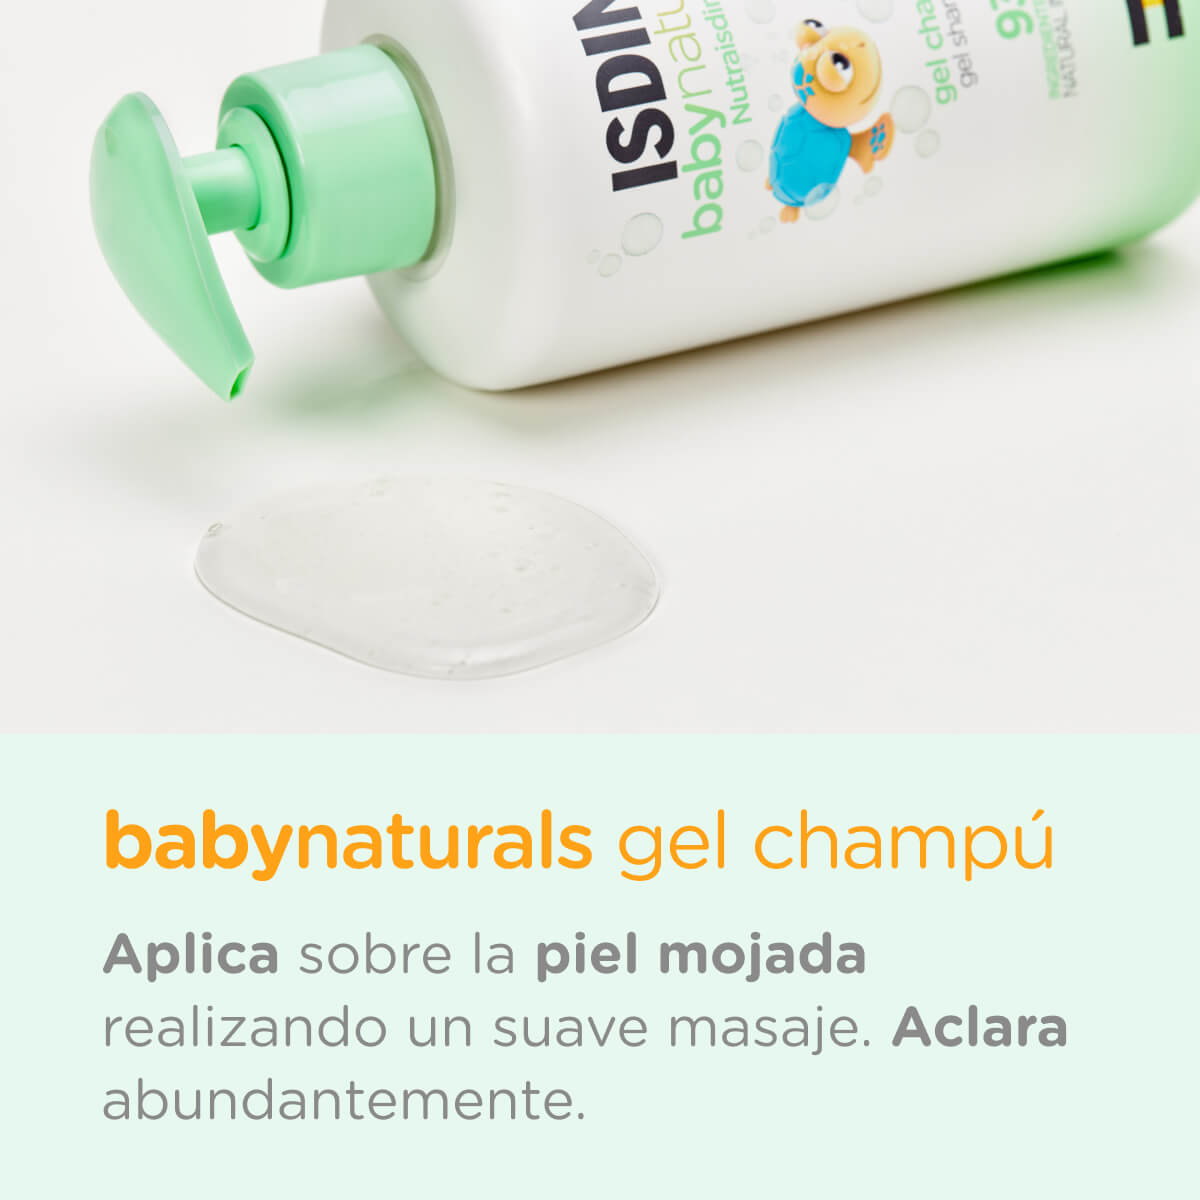 Isdin baby naturals gel champu 750 ml - parafarmacia - salunatur